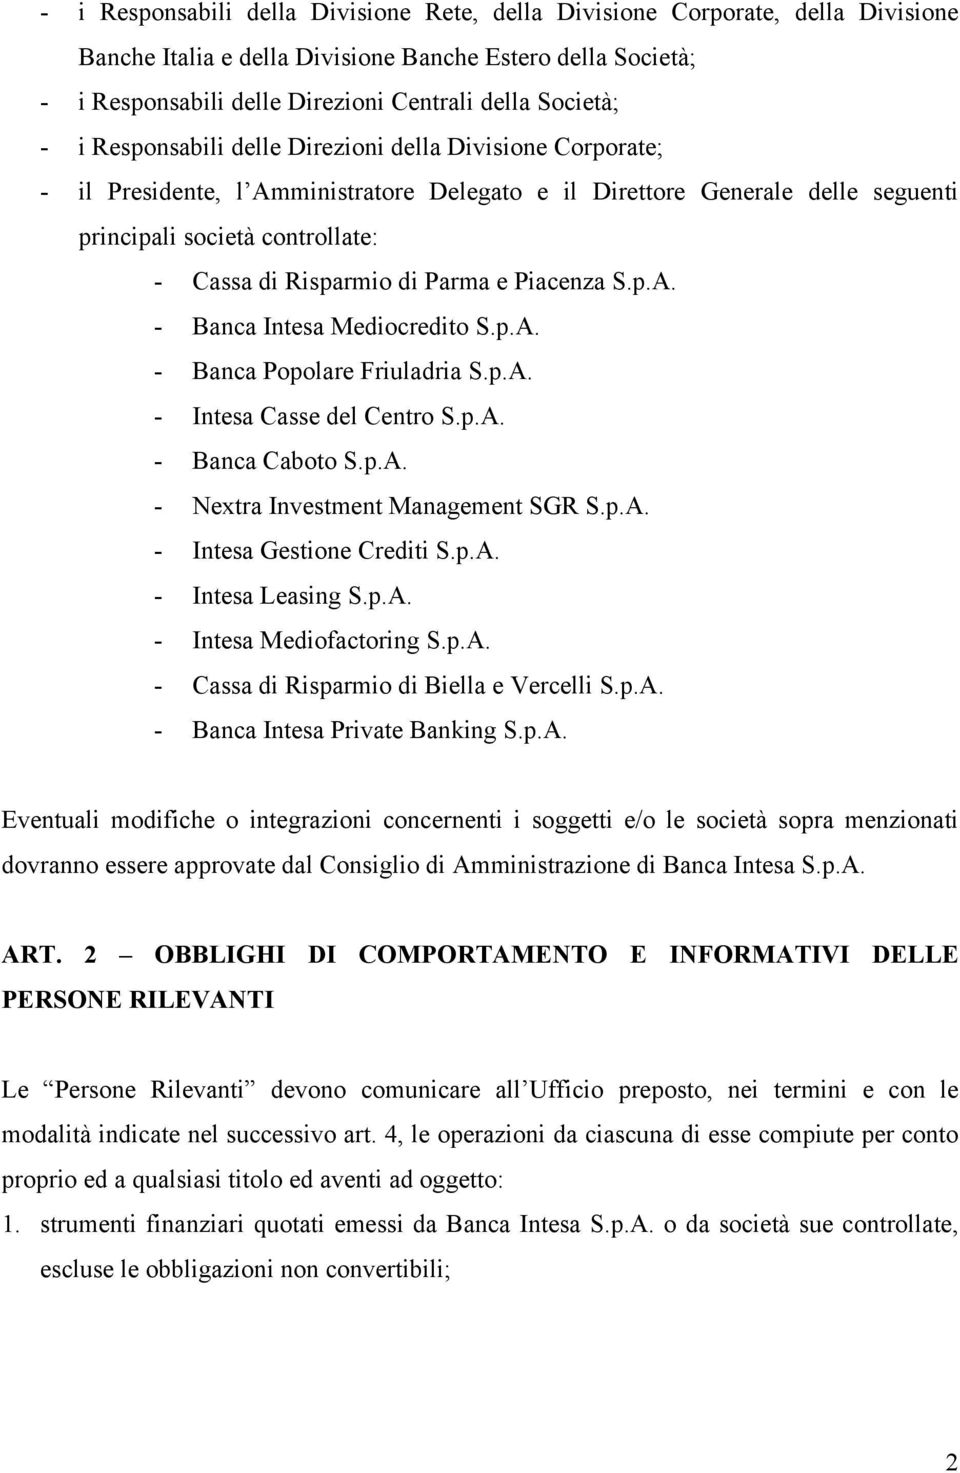 Parma e Piacenza S.p.A. - Banca Intesa Mediocredito S.p.A. - Banca Popolare Friuladria S.p.A. - Intesa Casse del Centro S.p.A. - Banca Caboto S.p.A. - Nextra Investment Management SGR S.p.A. - Intesa Gestione Crediti S.